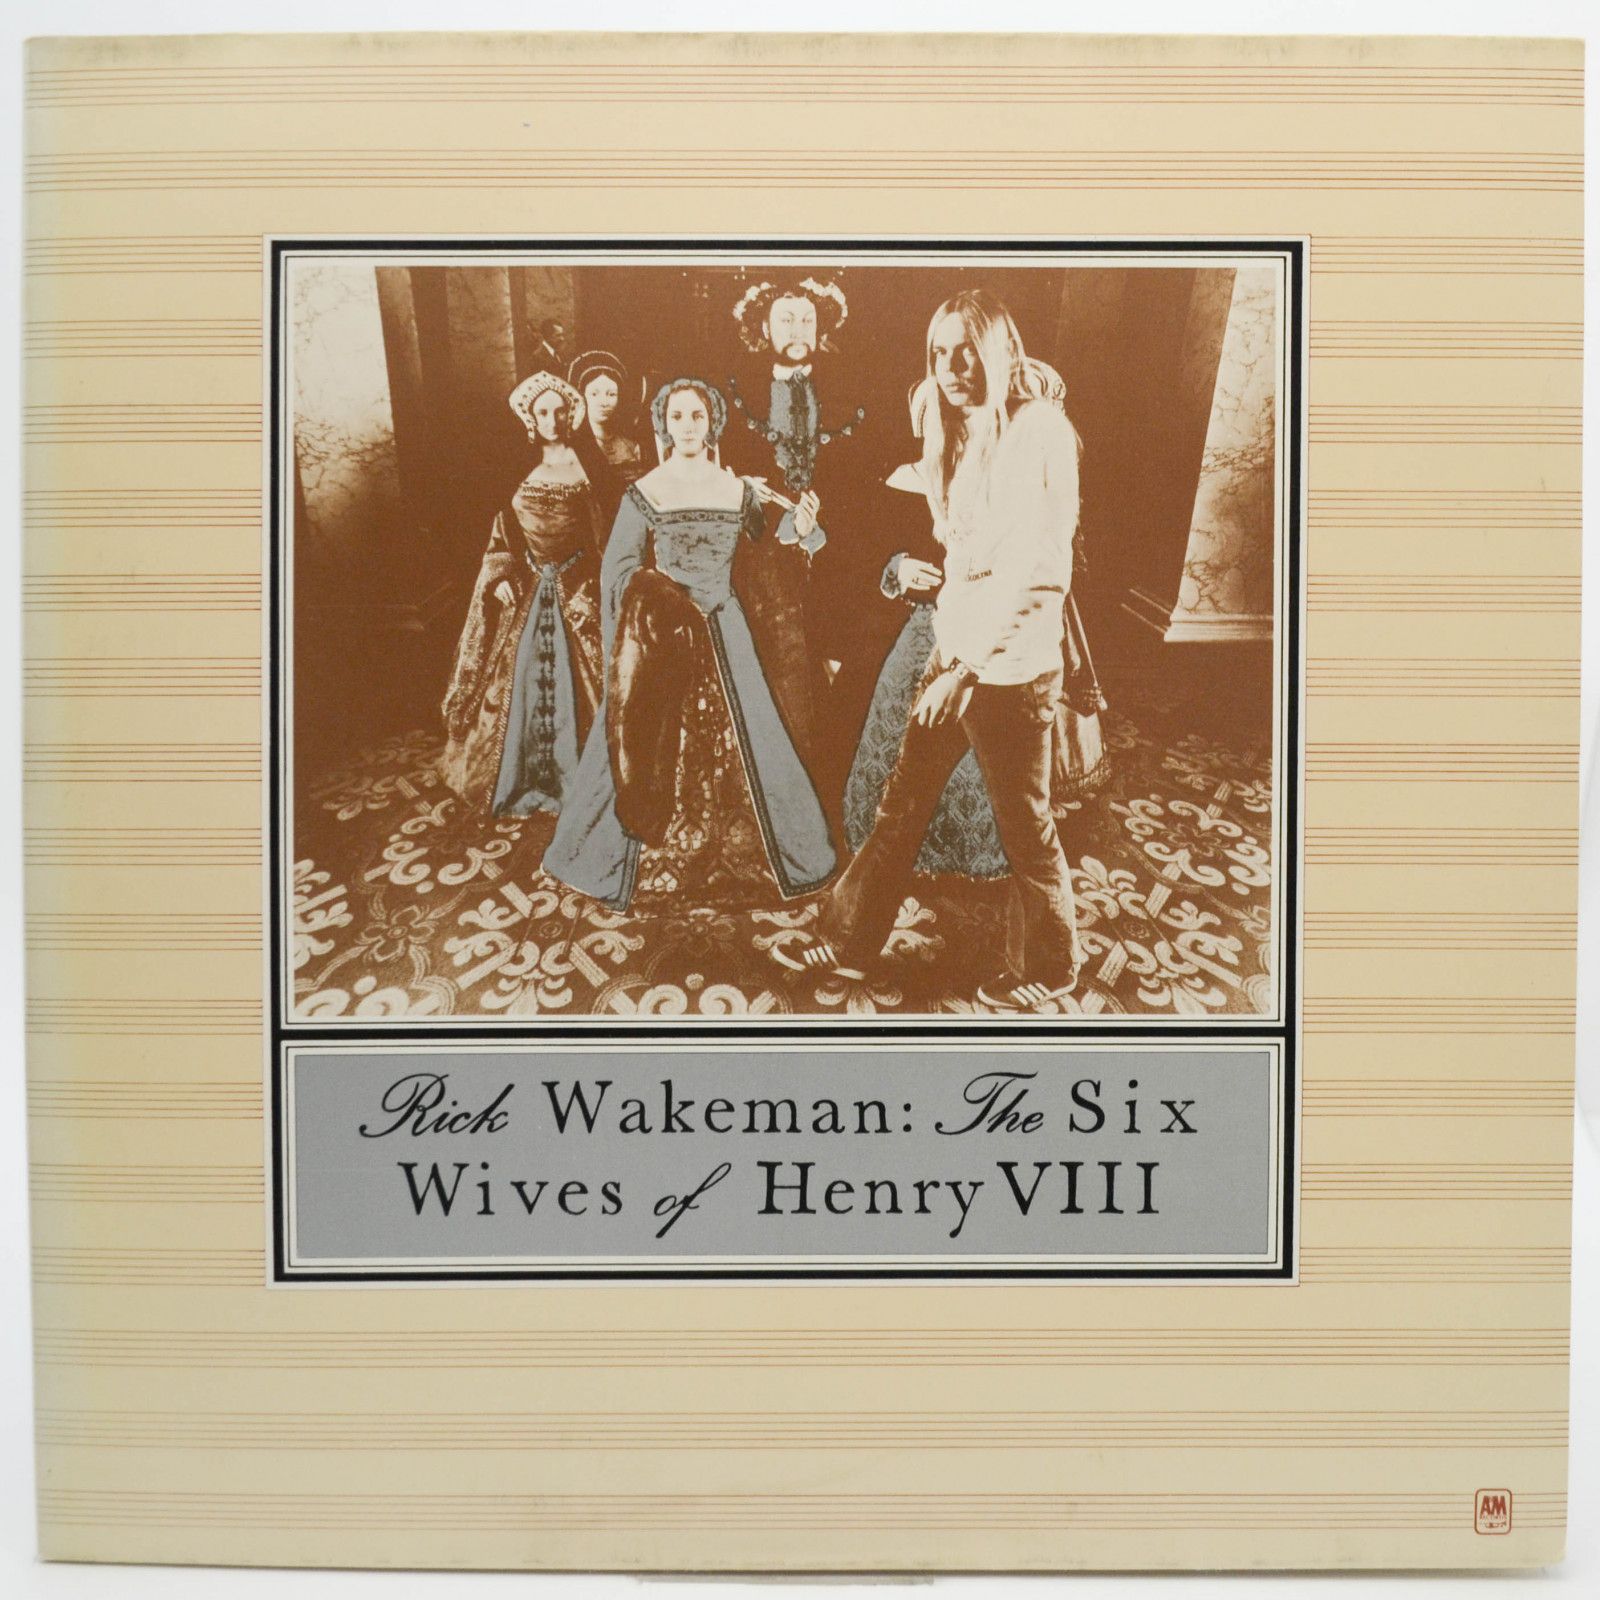 Rick Wakeman — The Six Wives Of Henry VIII, 1973